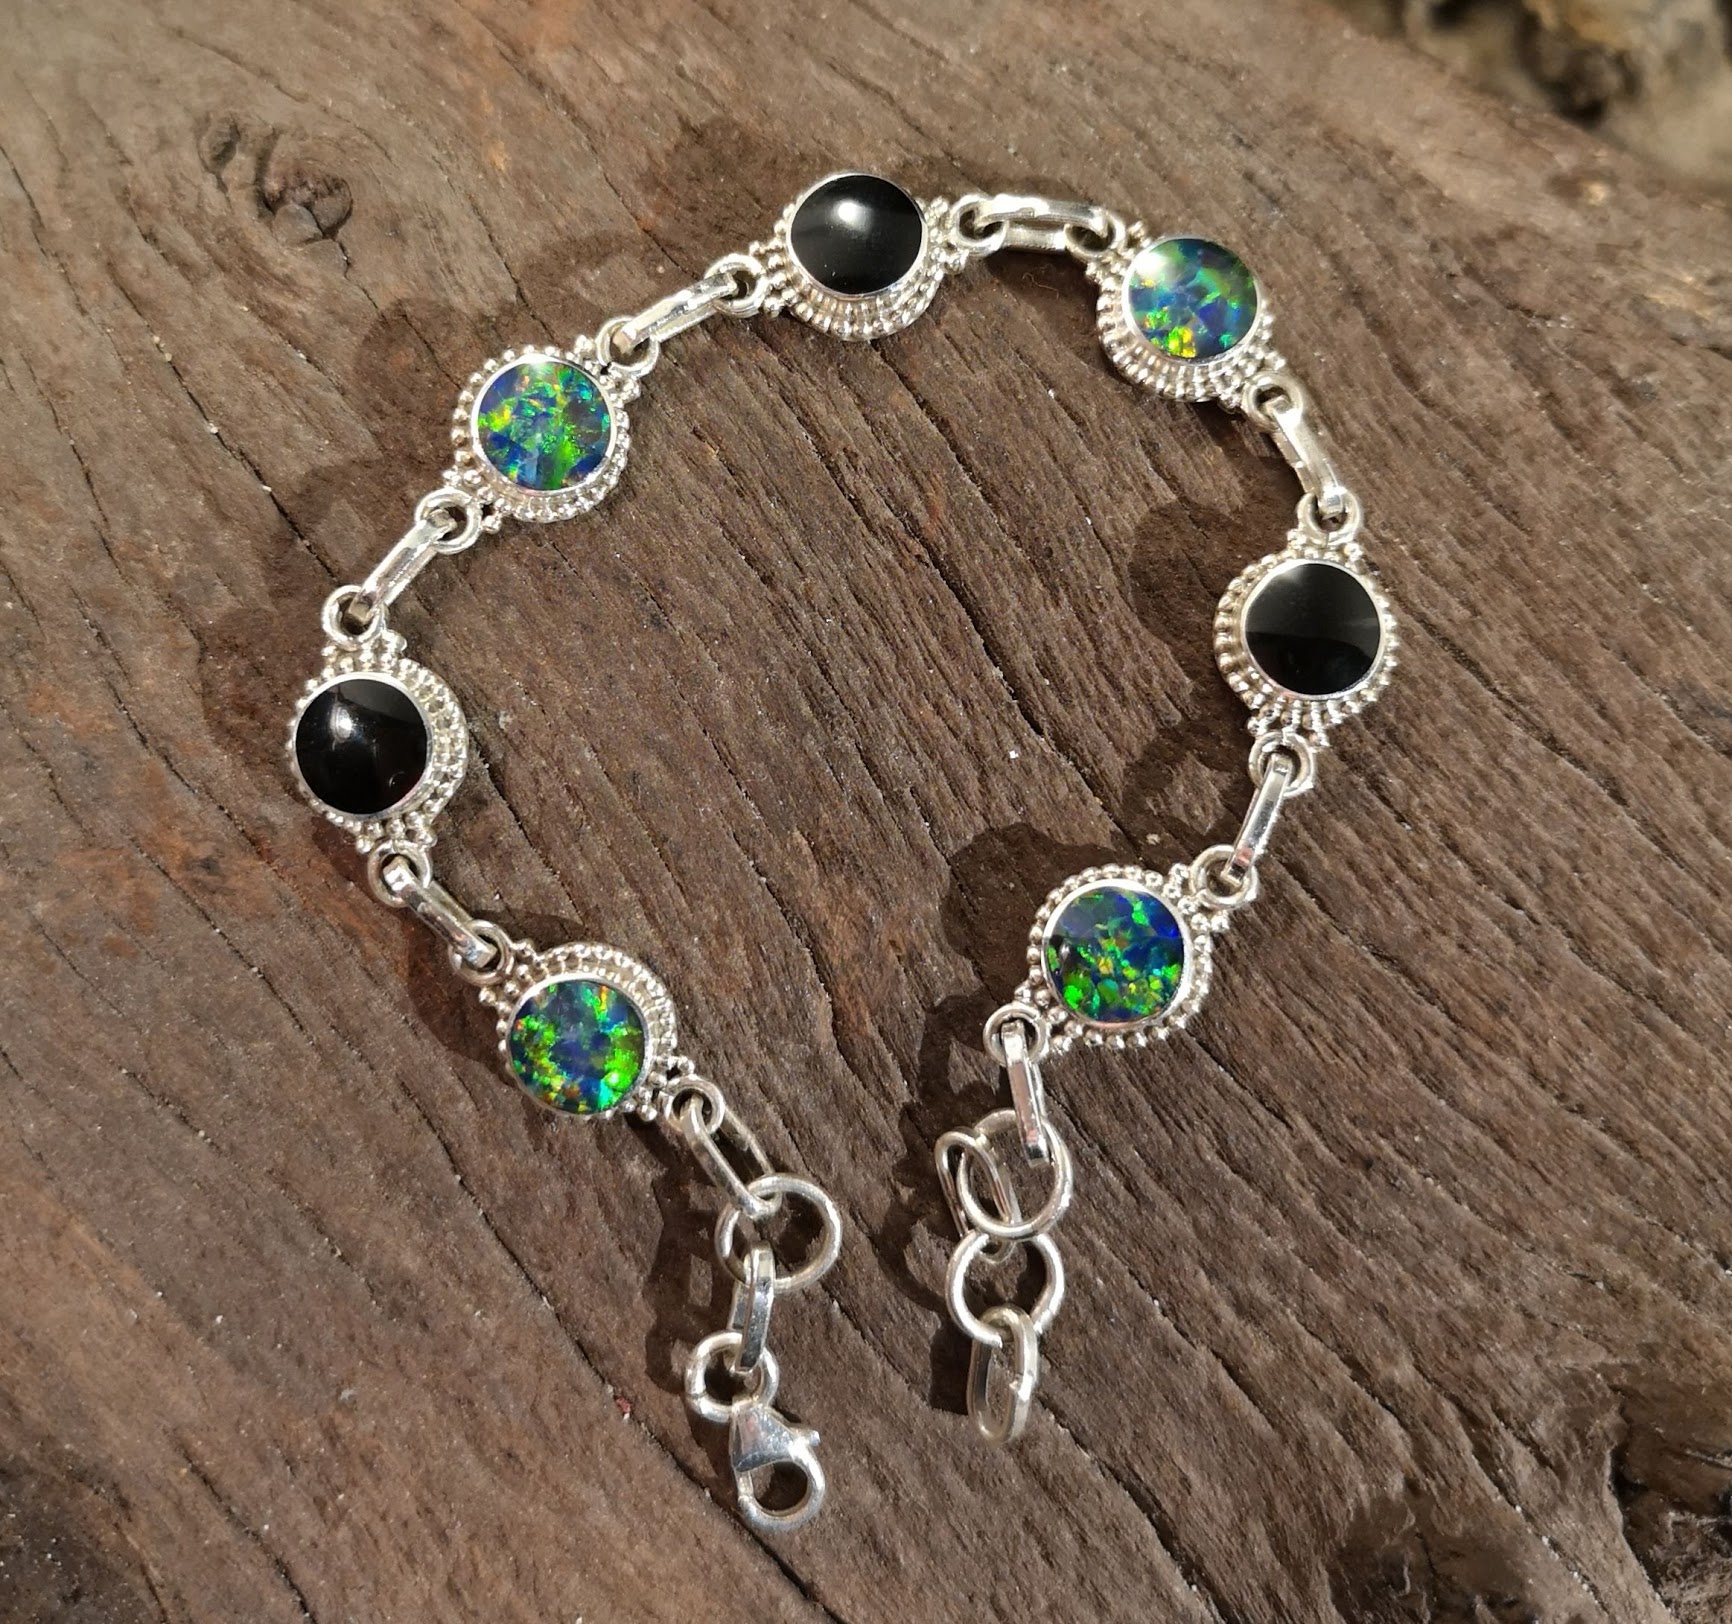 6mm rope-edge opal bracelet